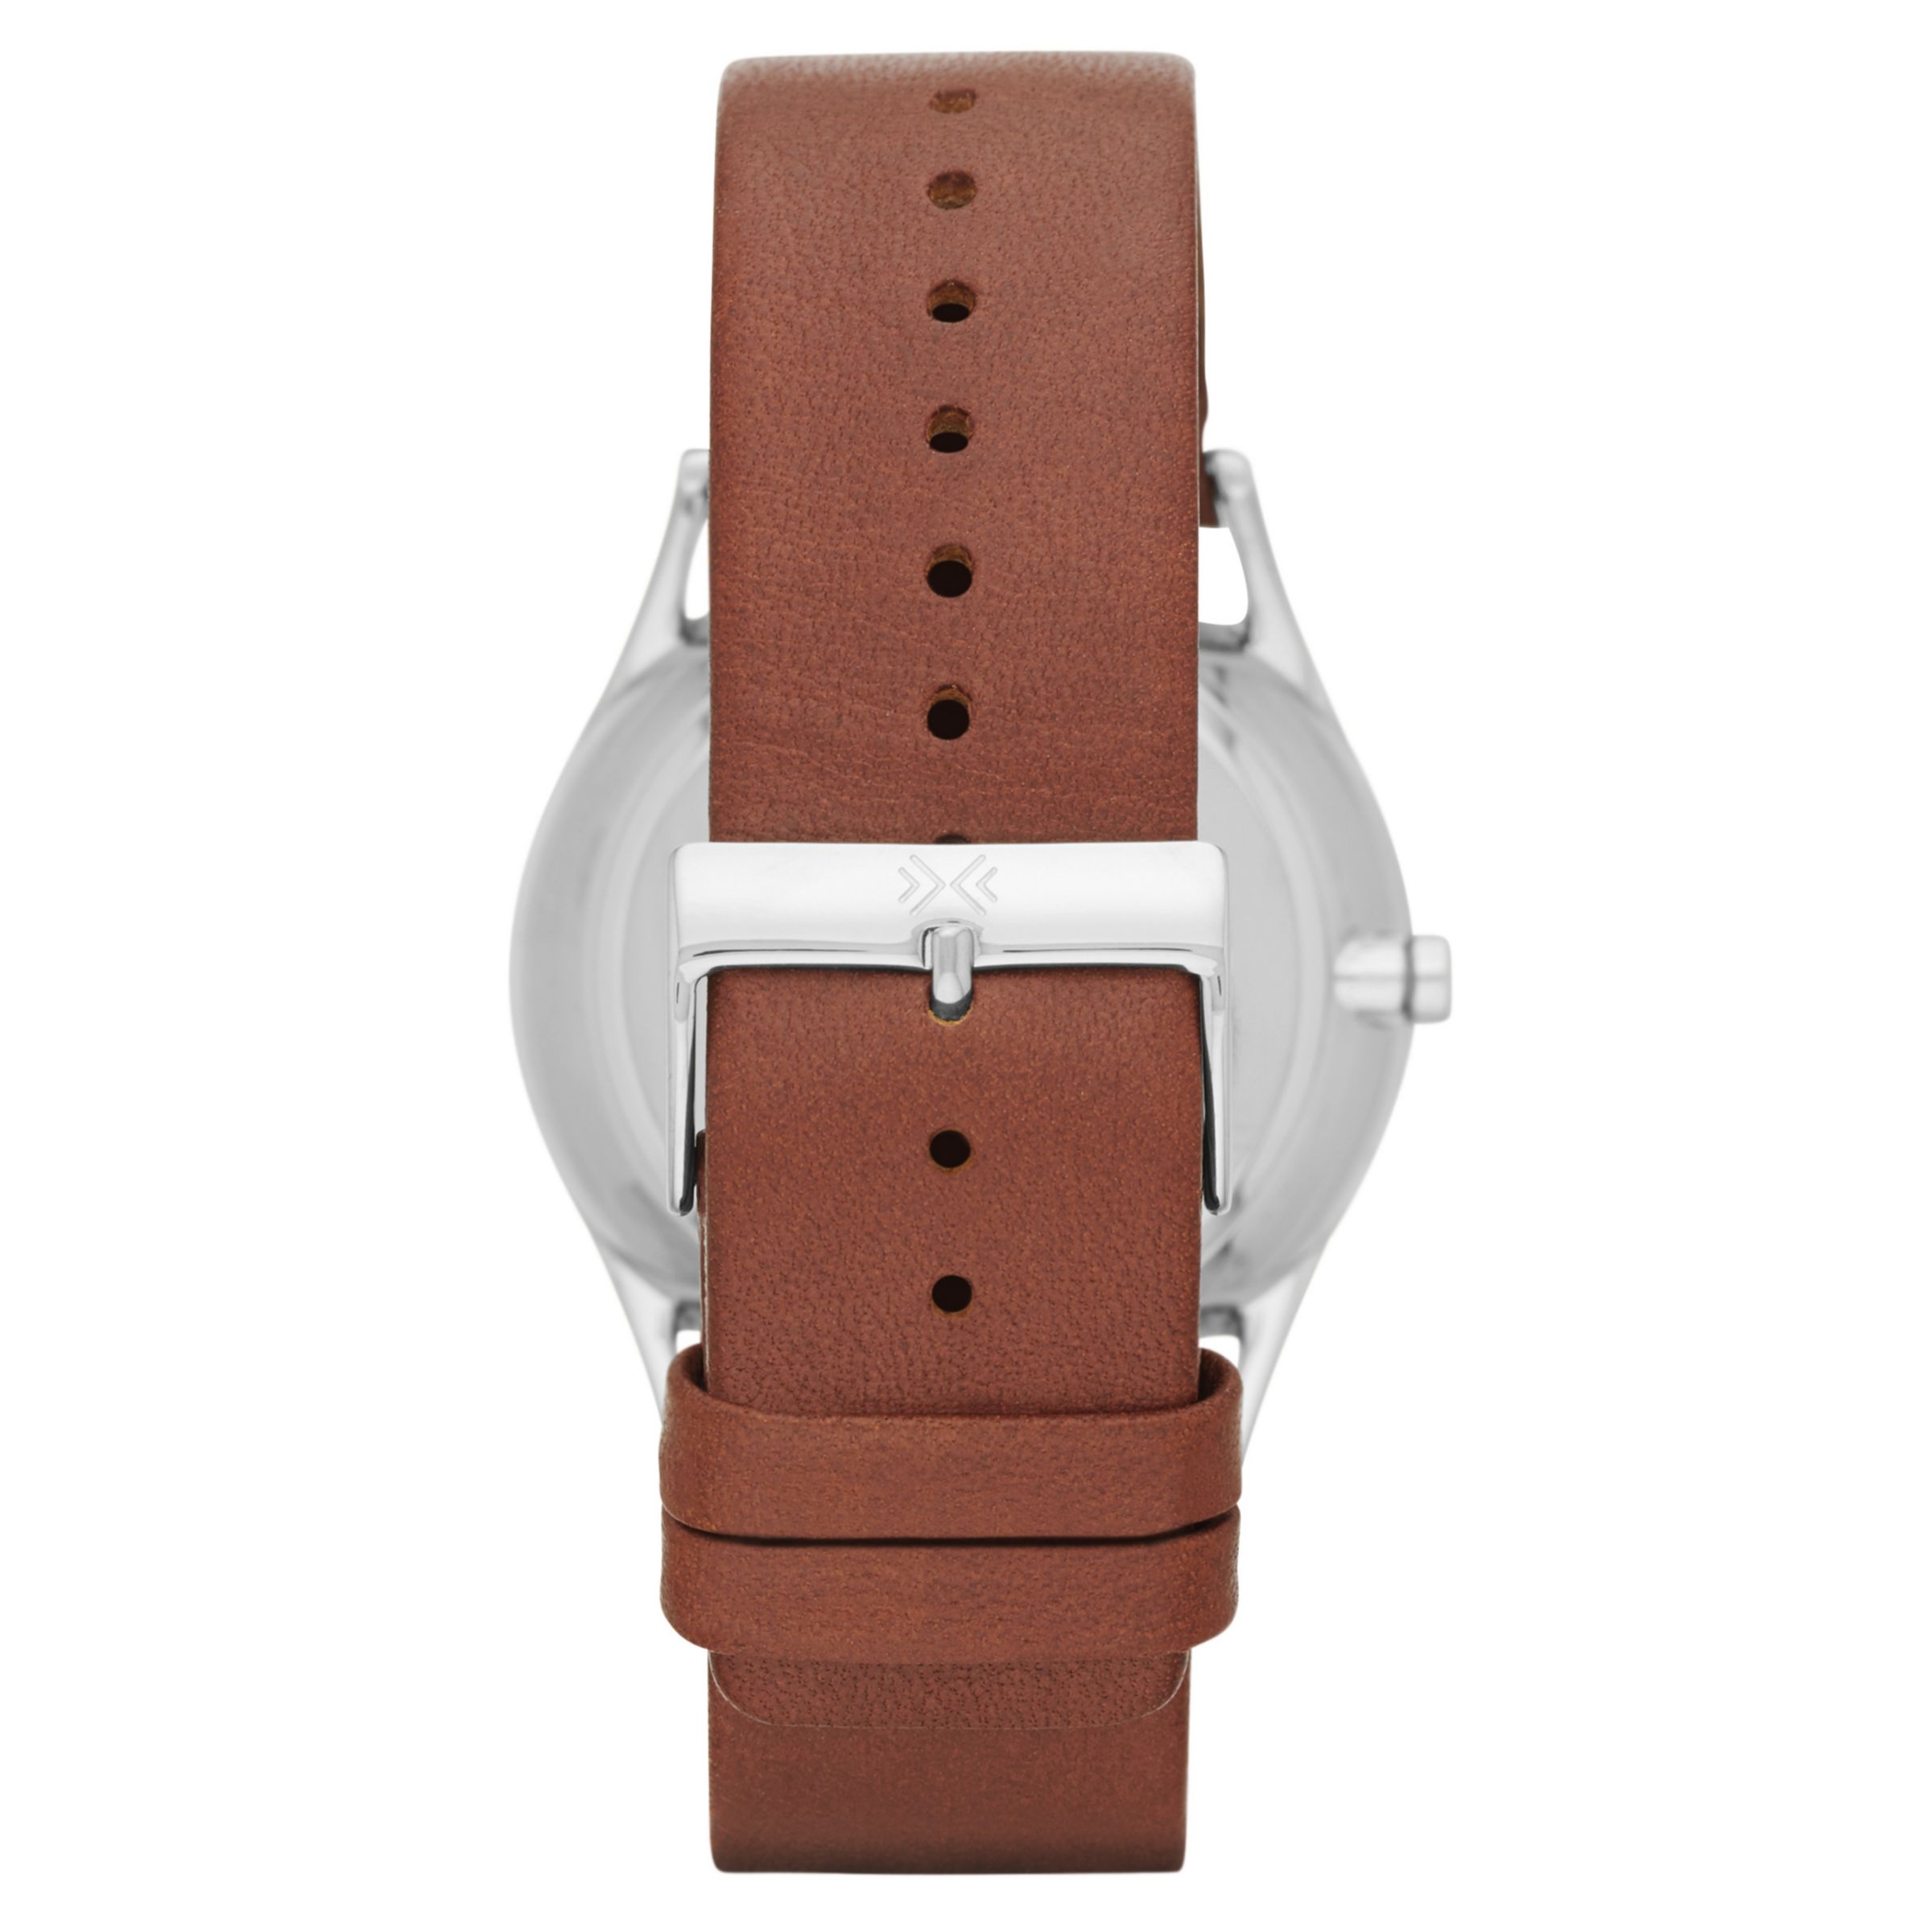 Buy Skagen SKW6086 Men's Holst Single Chronograph Leather Strap Watch, Brown/Grey Online at johnlewis.com